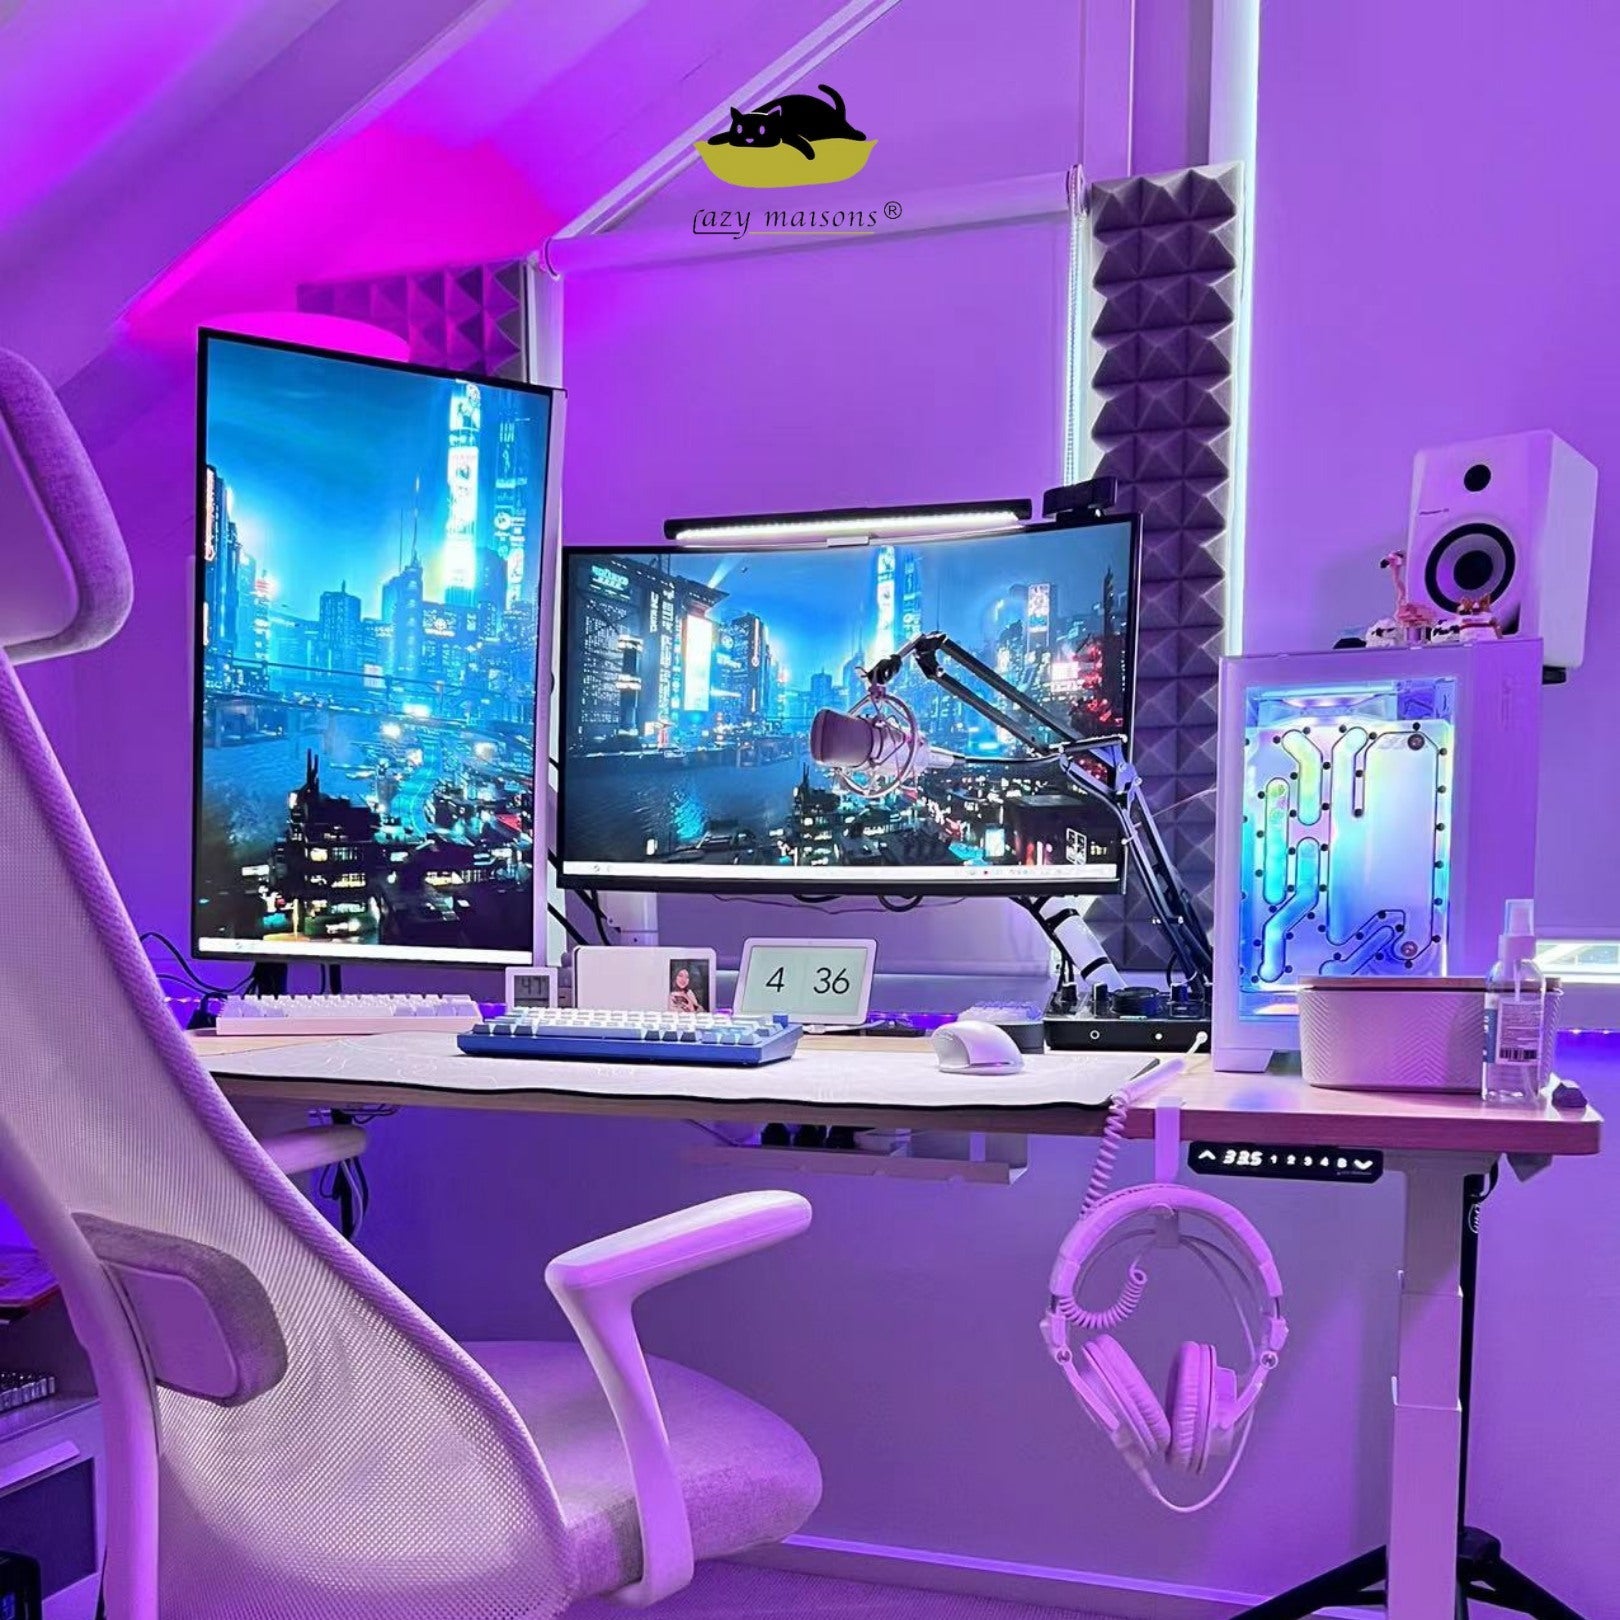 Are Adjustable Desks for Gamers? - Lazy Maisons®